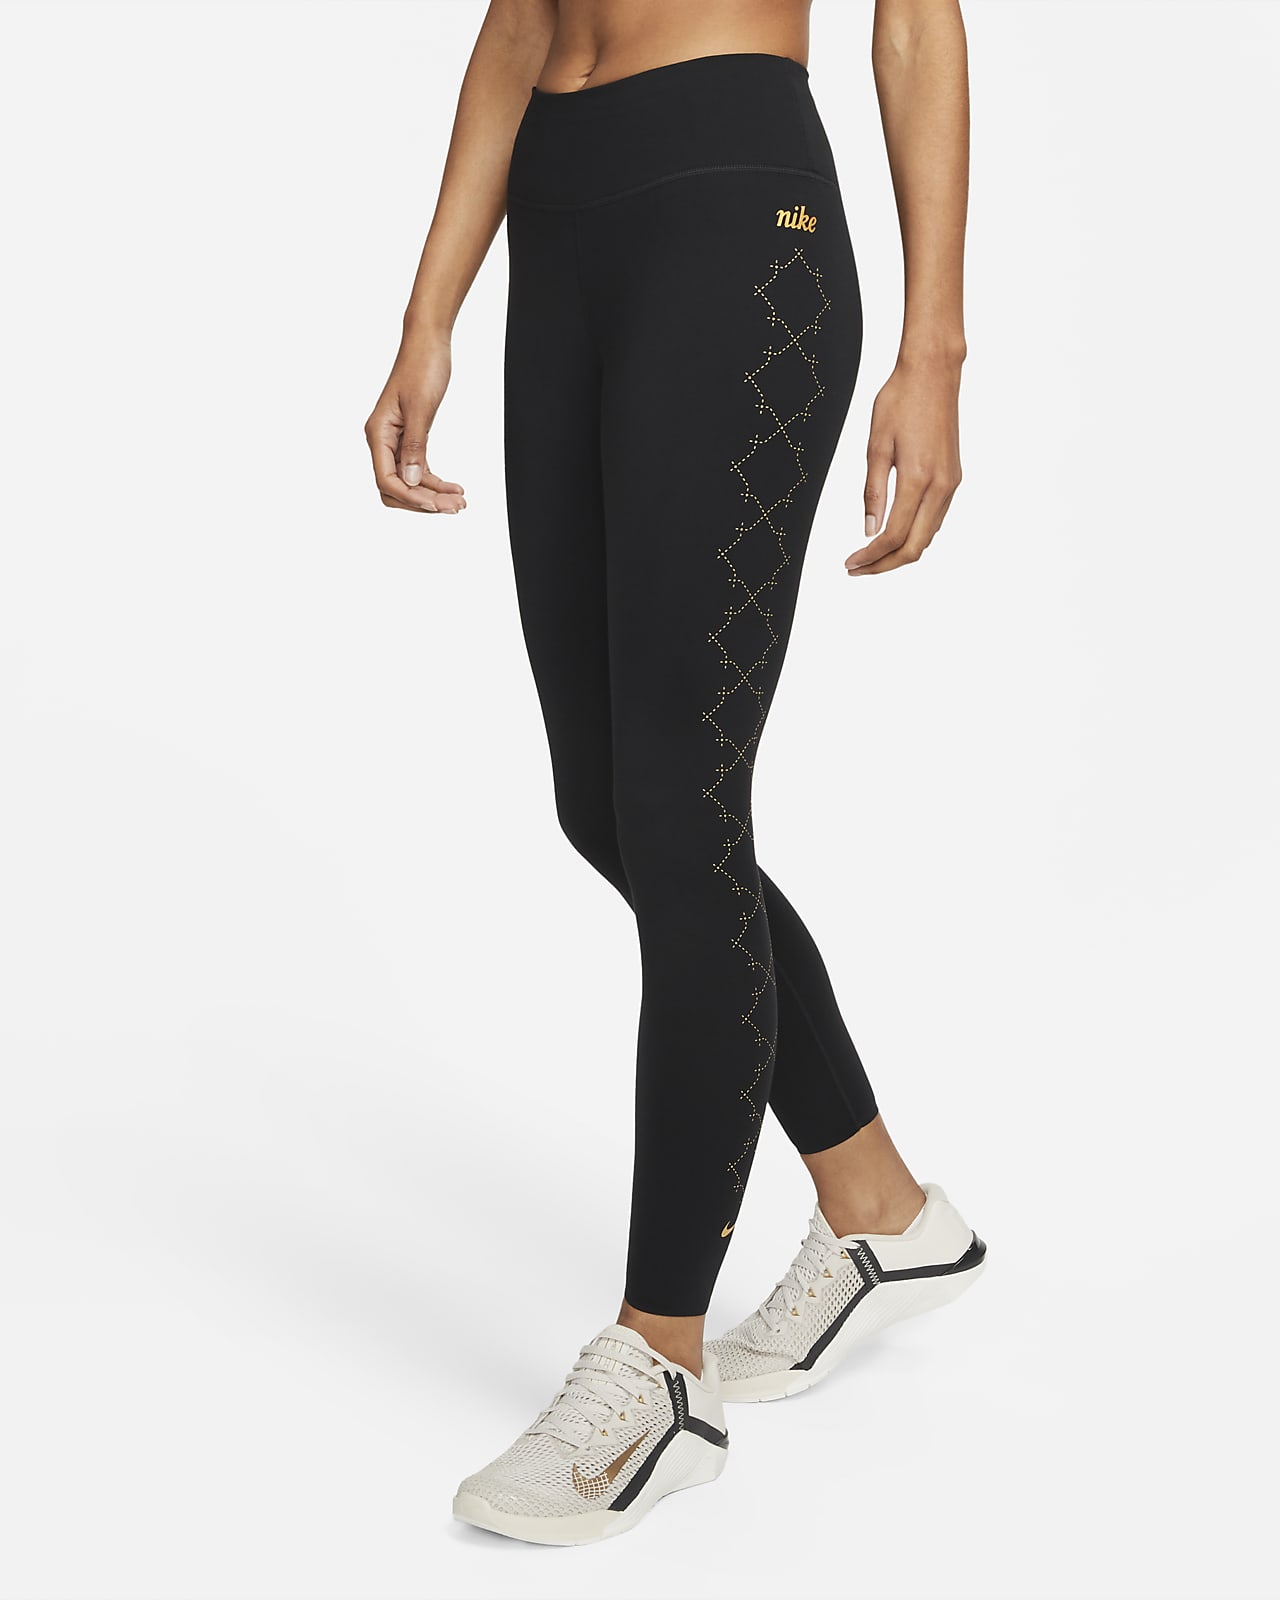 Nike Dri-FIT One Luxe Women's Mid-Rise 7/8 Printed Leggings